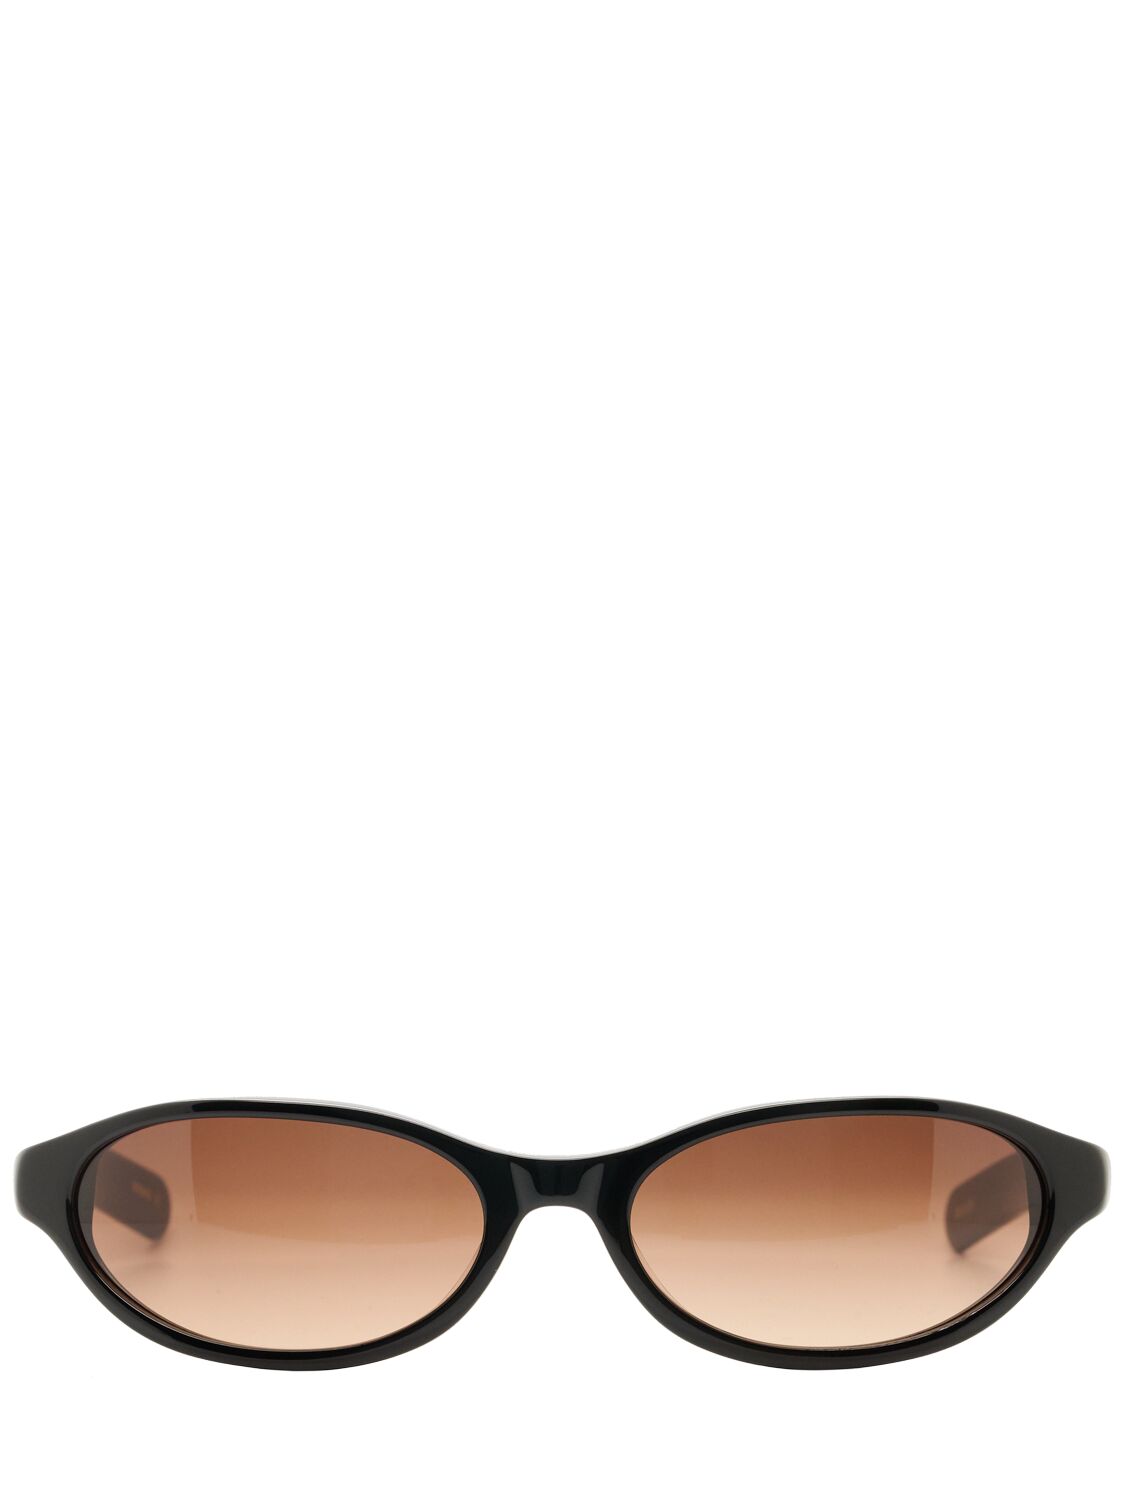 Olympia Acetate Sunglasses W/ Brown Lens